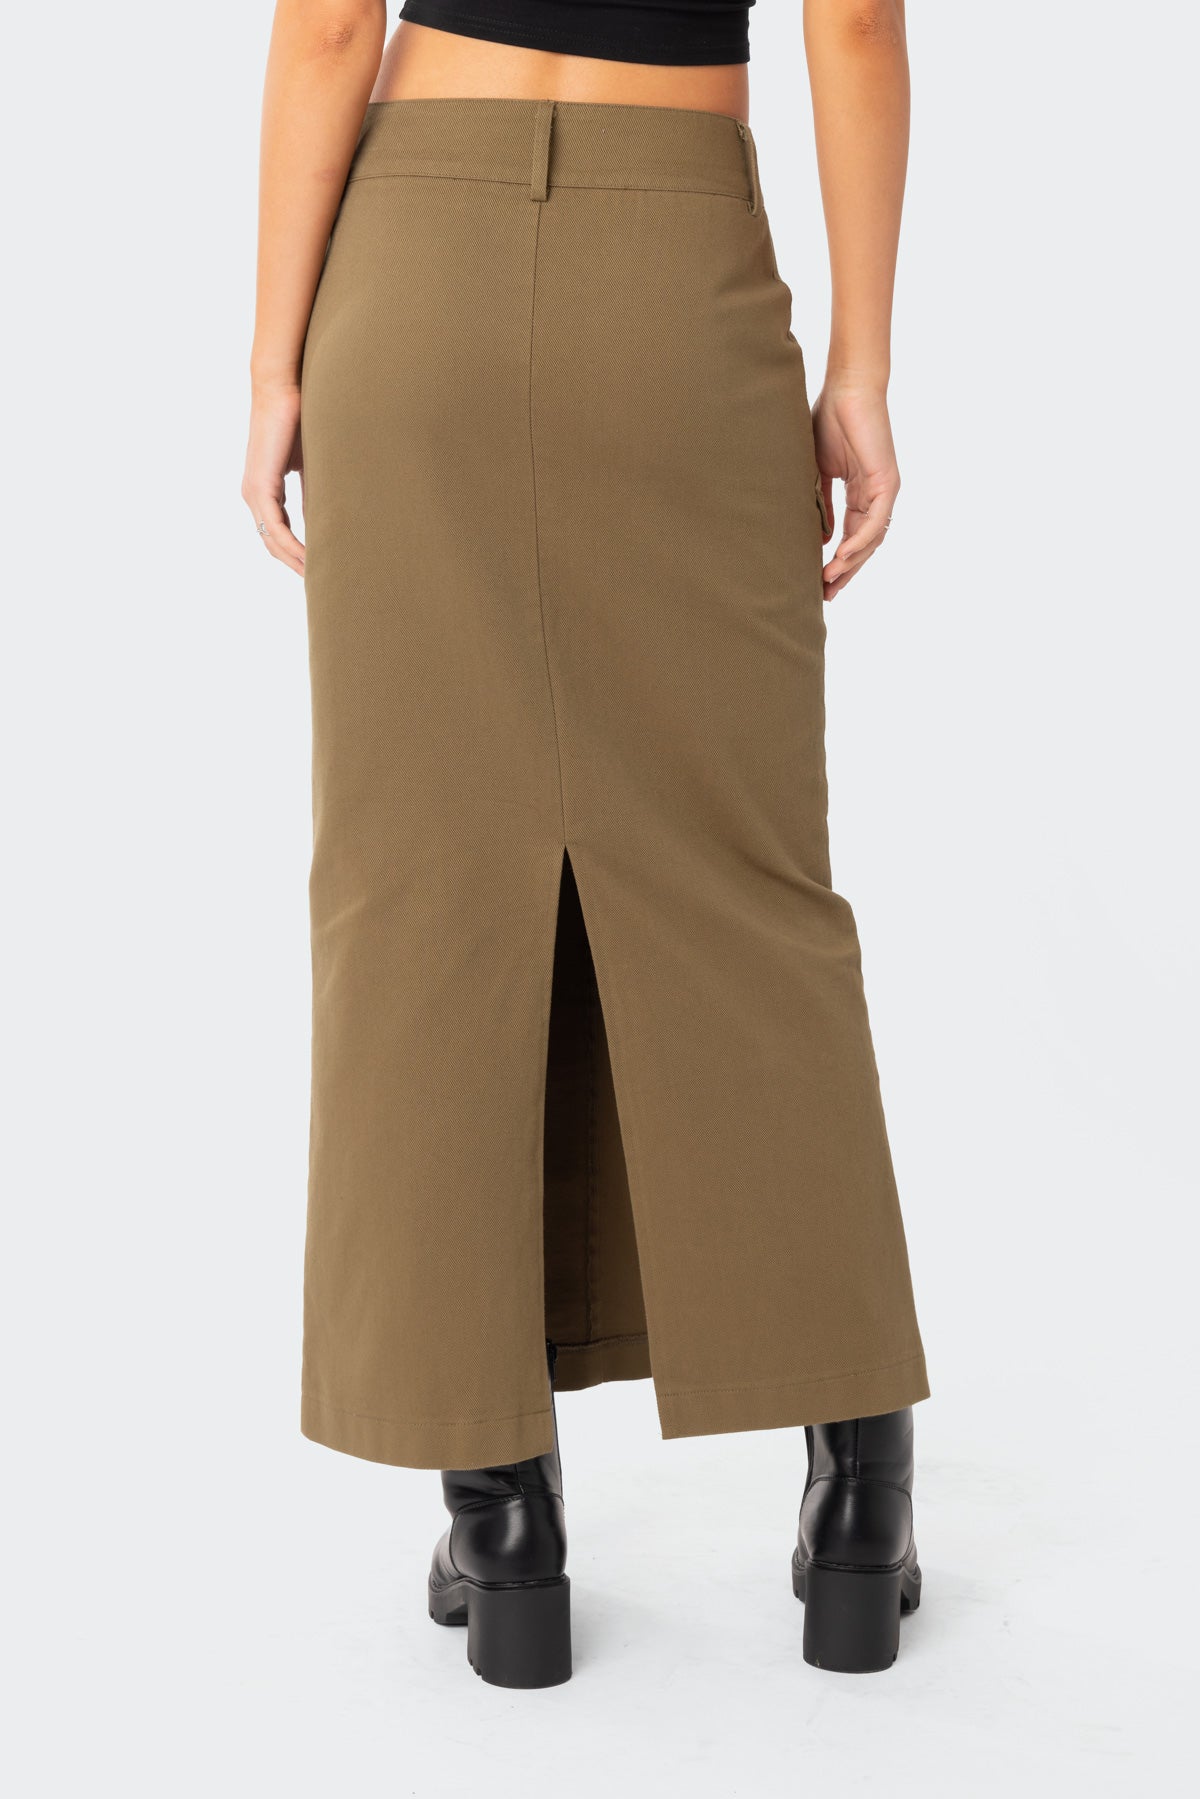 Cierra Low Rise Cargo Maxi Skirt